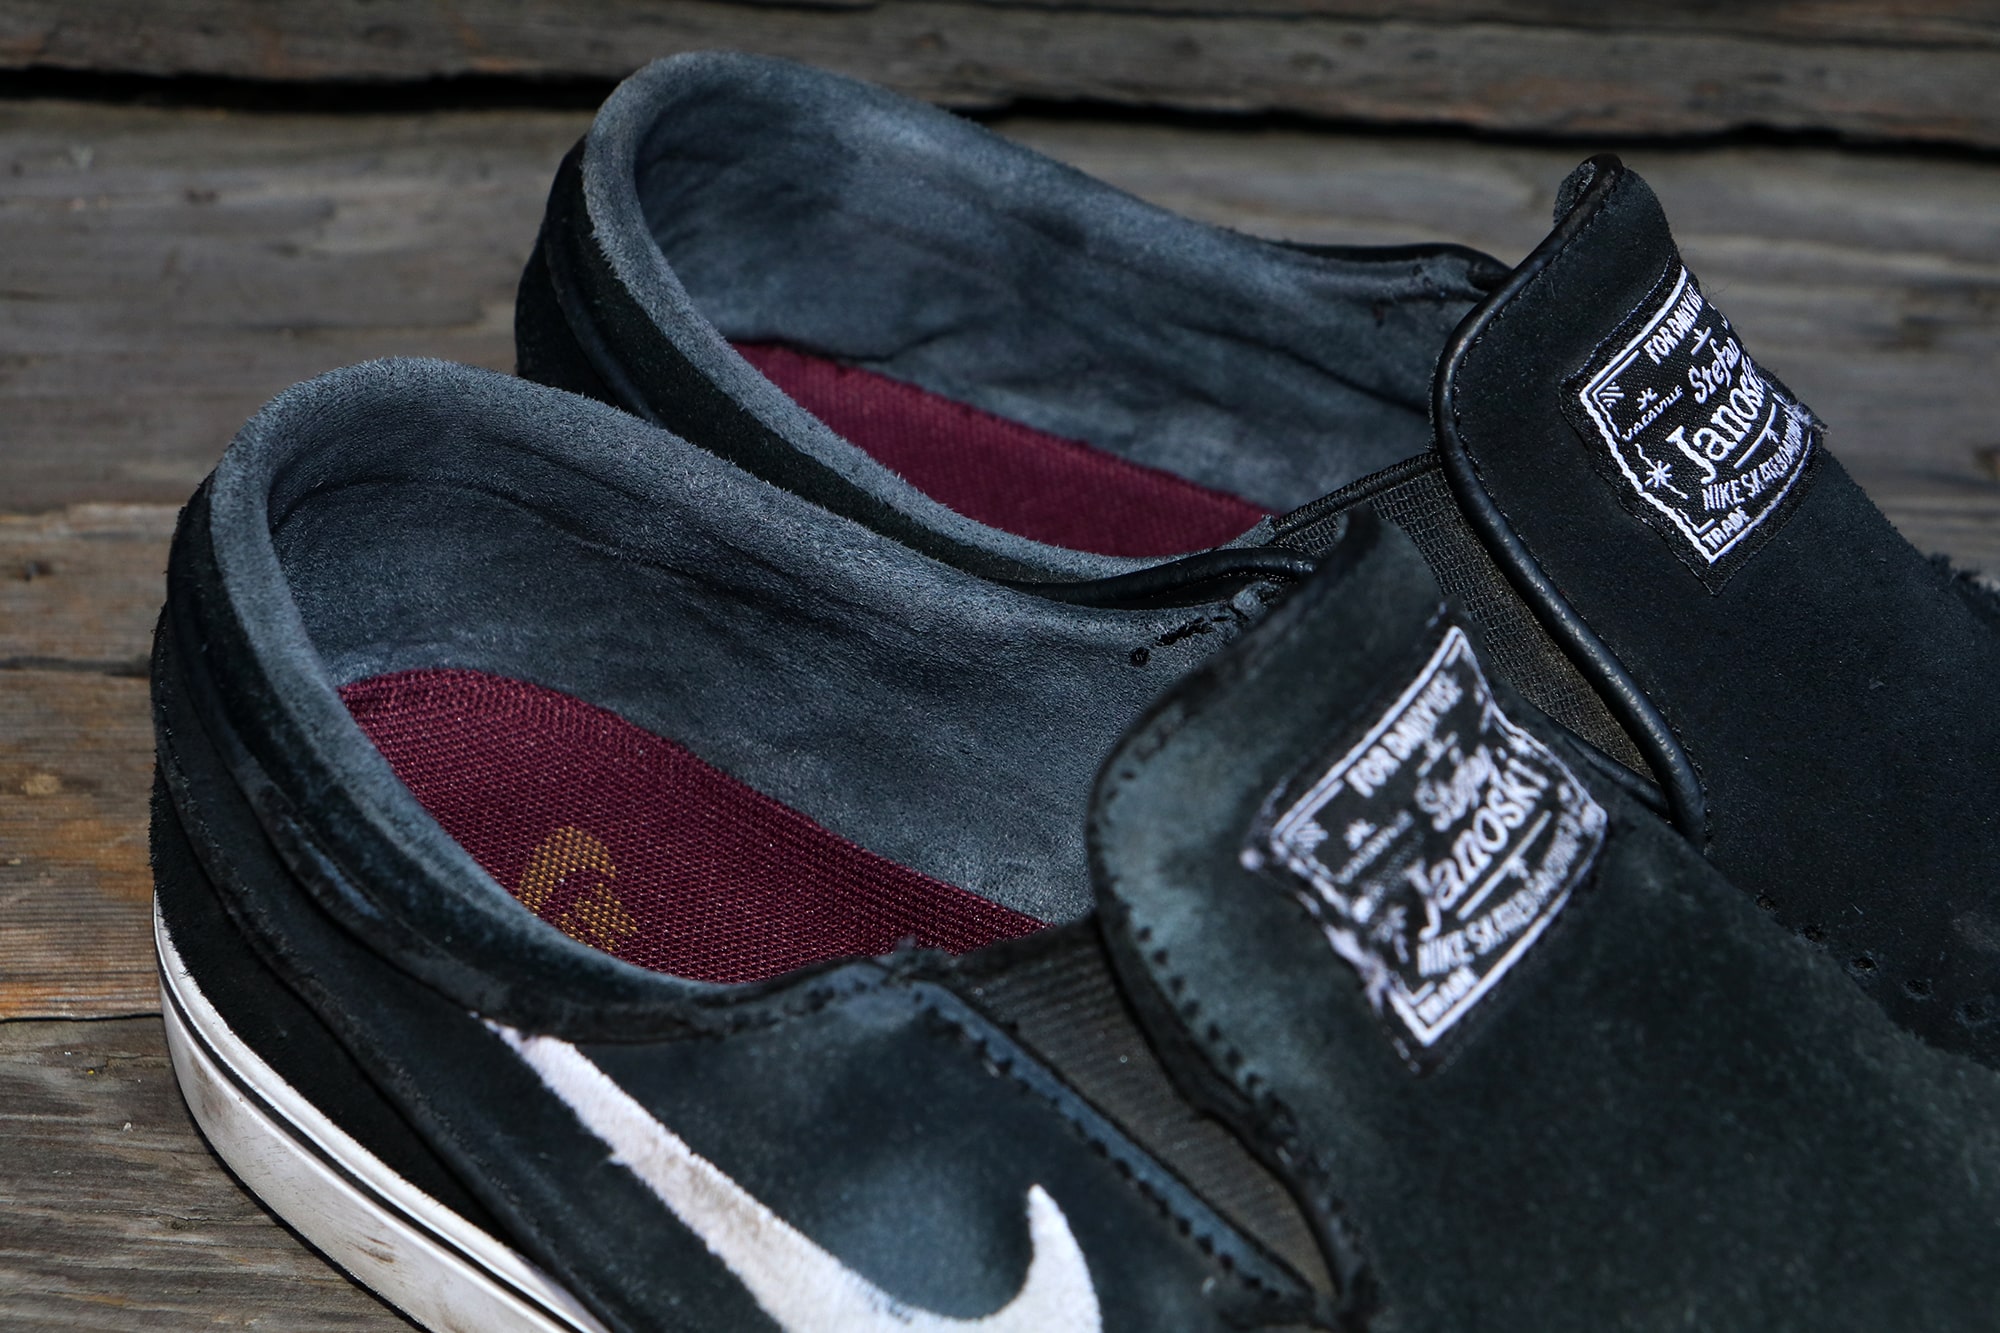 terugtrekken financiën andere Nike SB Janoski Slip Skate Shoes Wear Test Review | Tactics